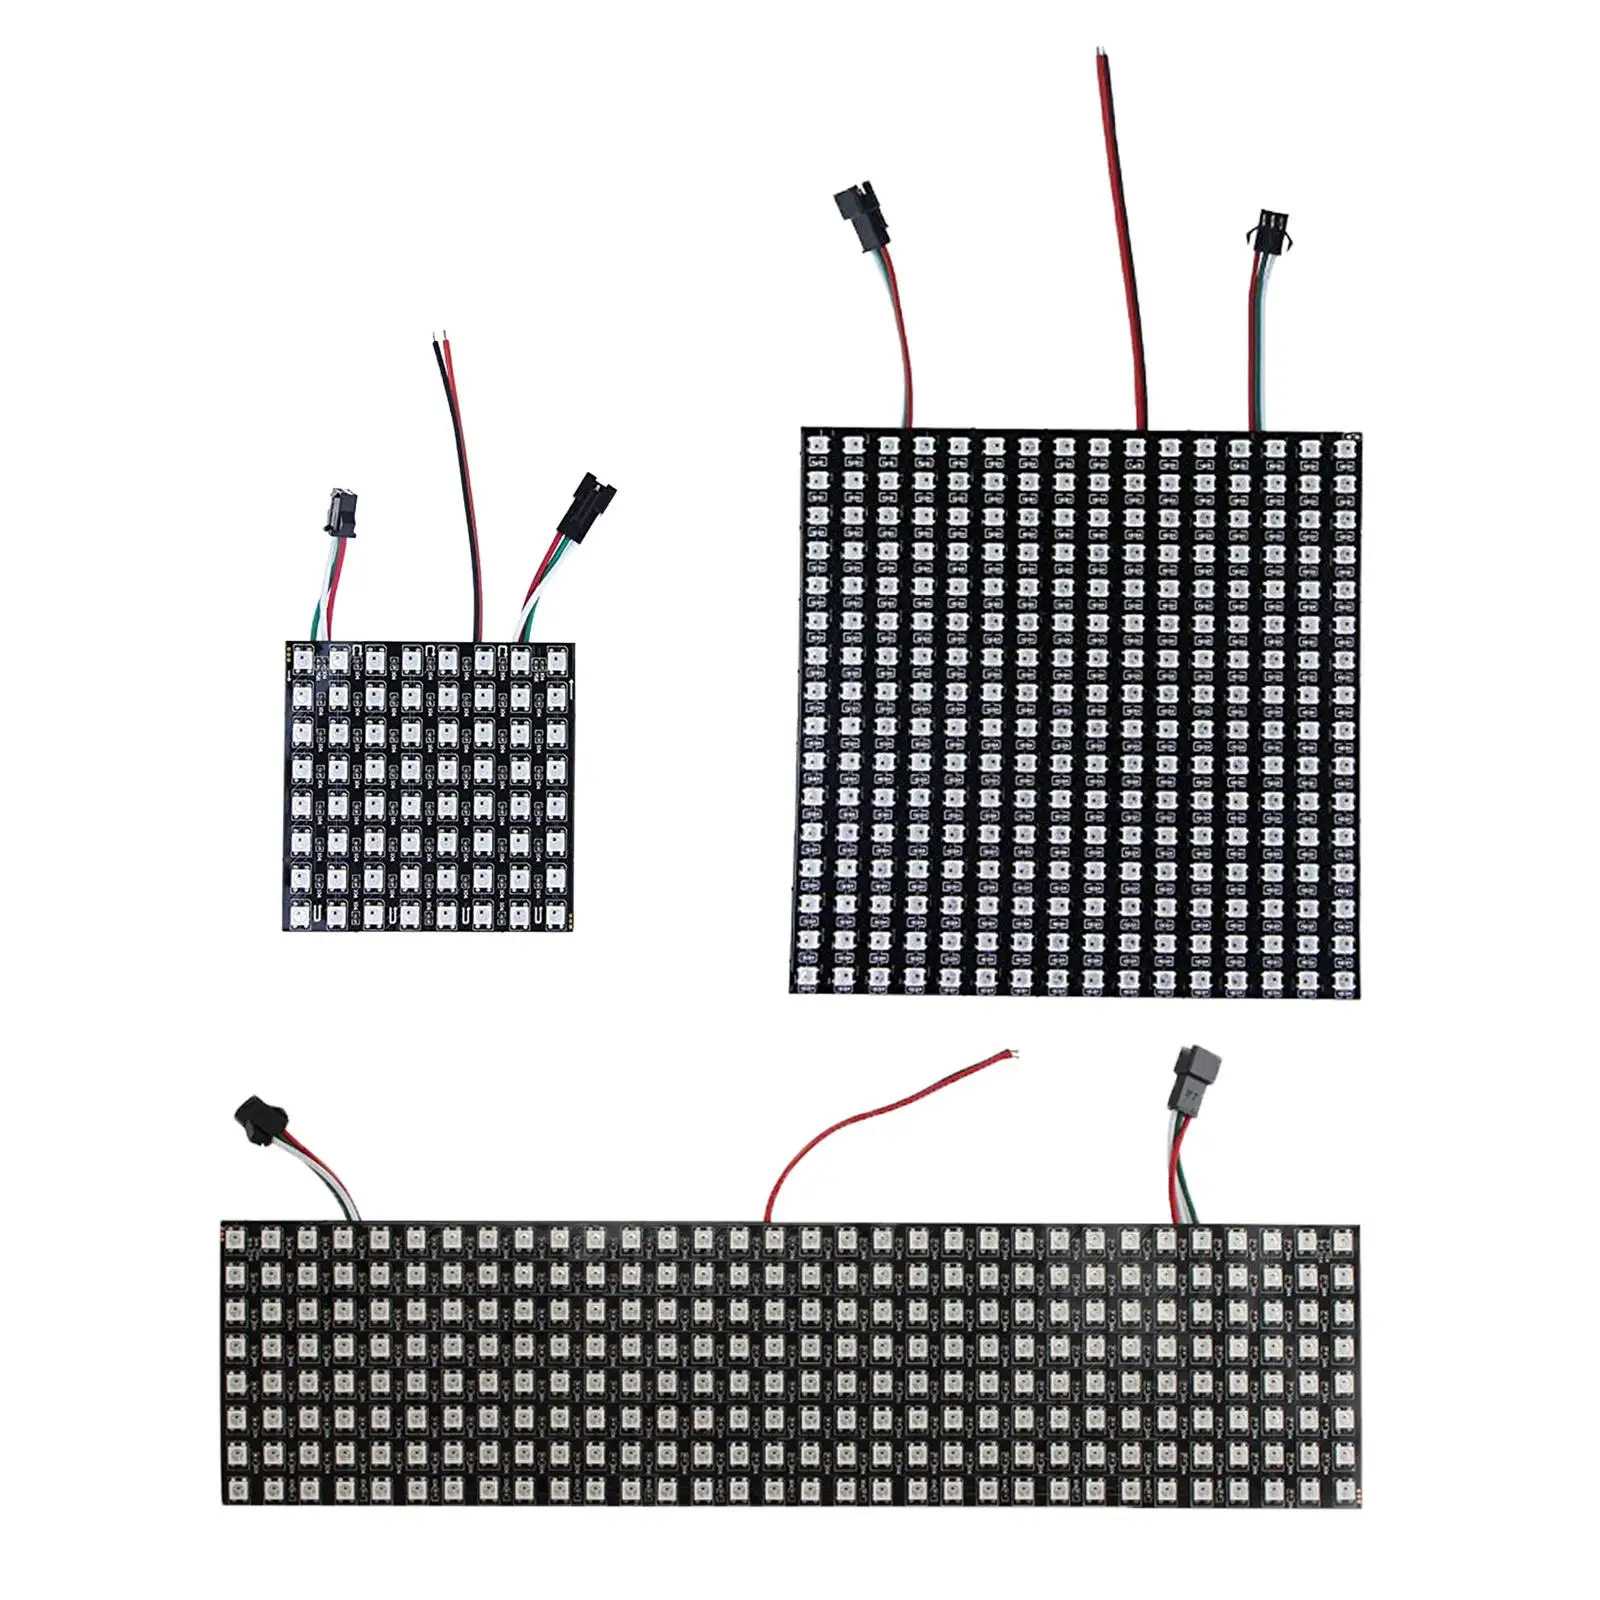 LED Pixels Matrix Panel WS2812B Individual Addressable Programmed 5050SMD Lighting Full Color Black PCB RGB Flexible DC5V